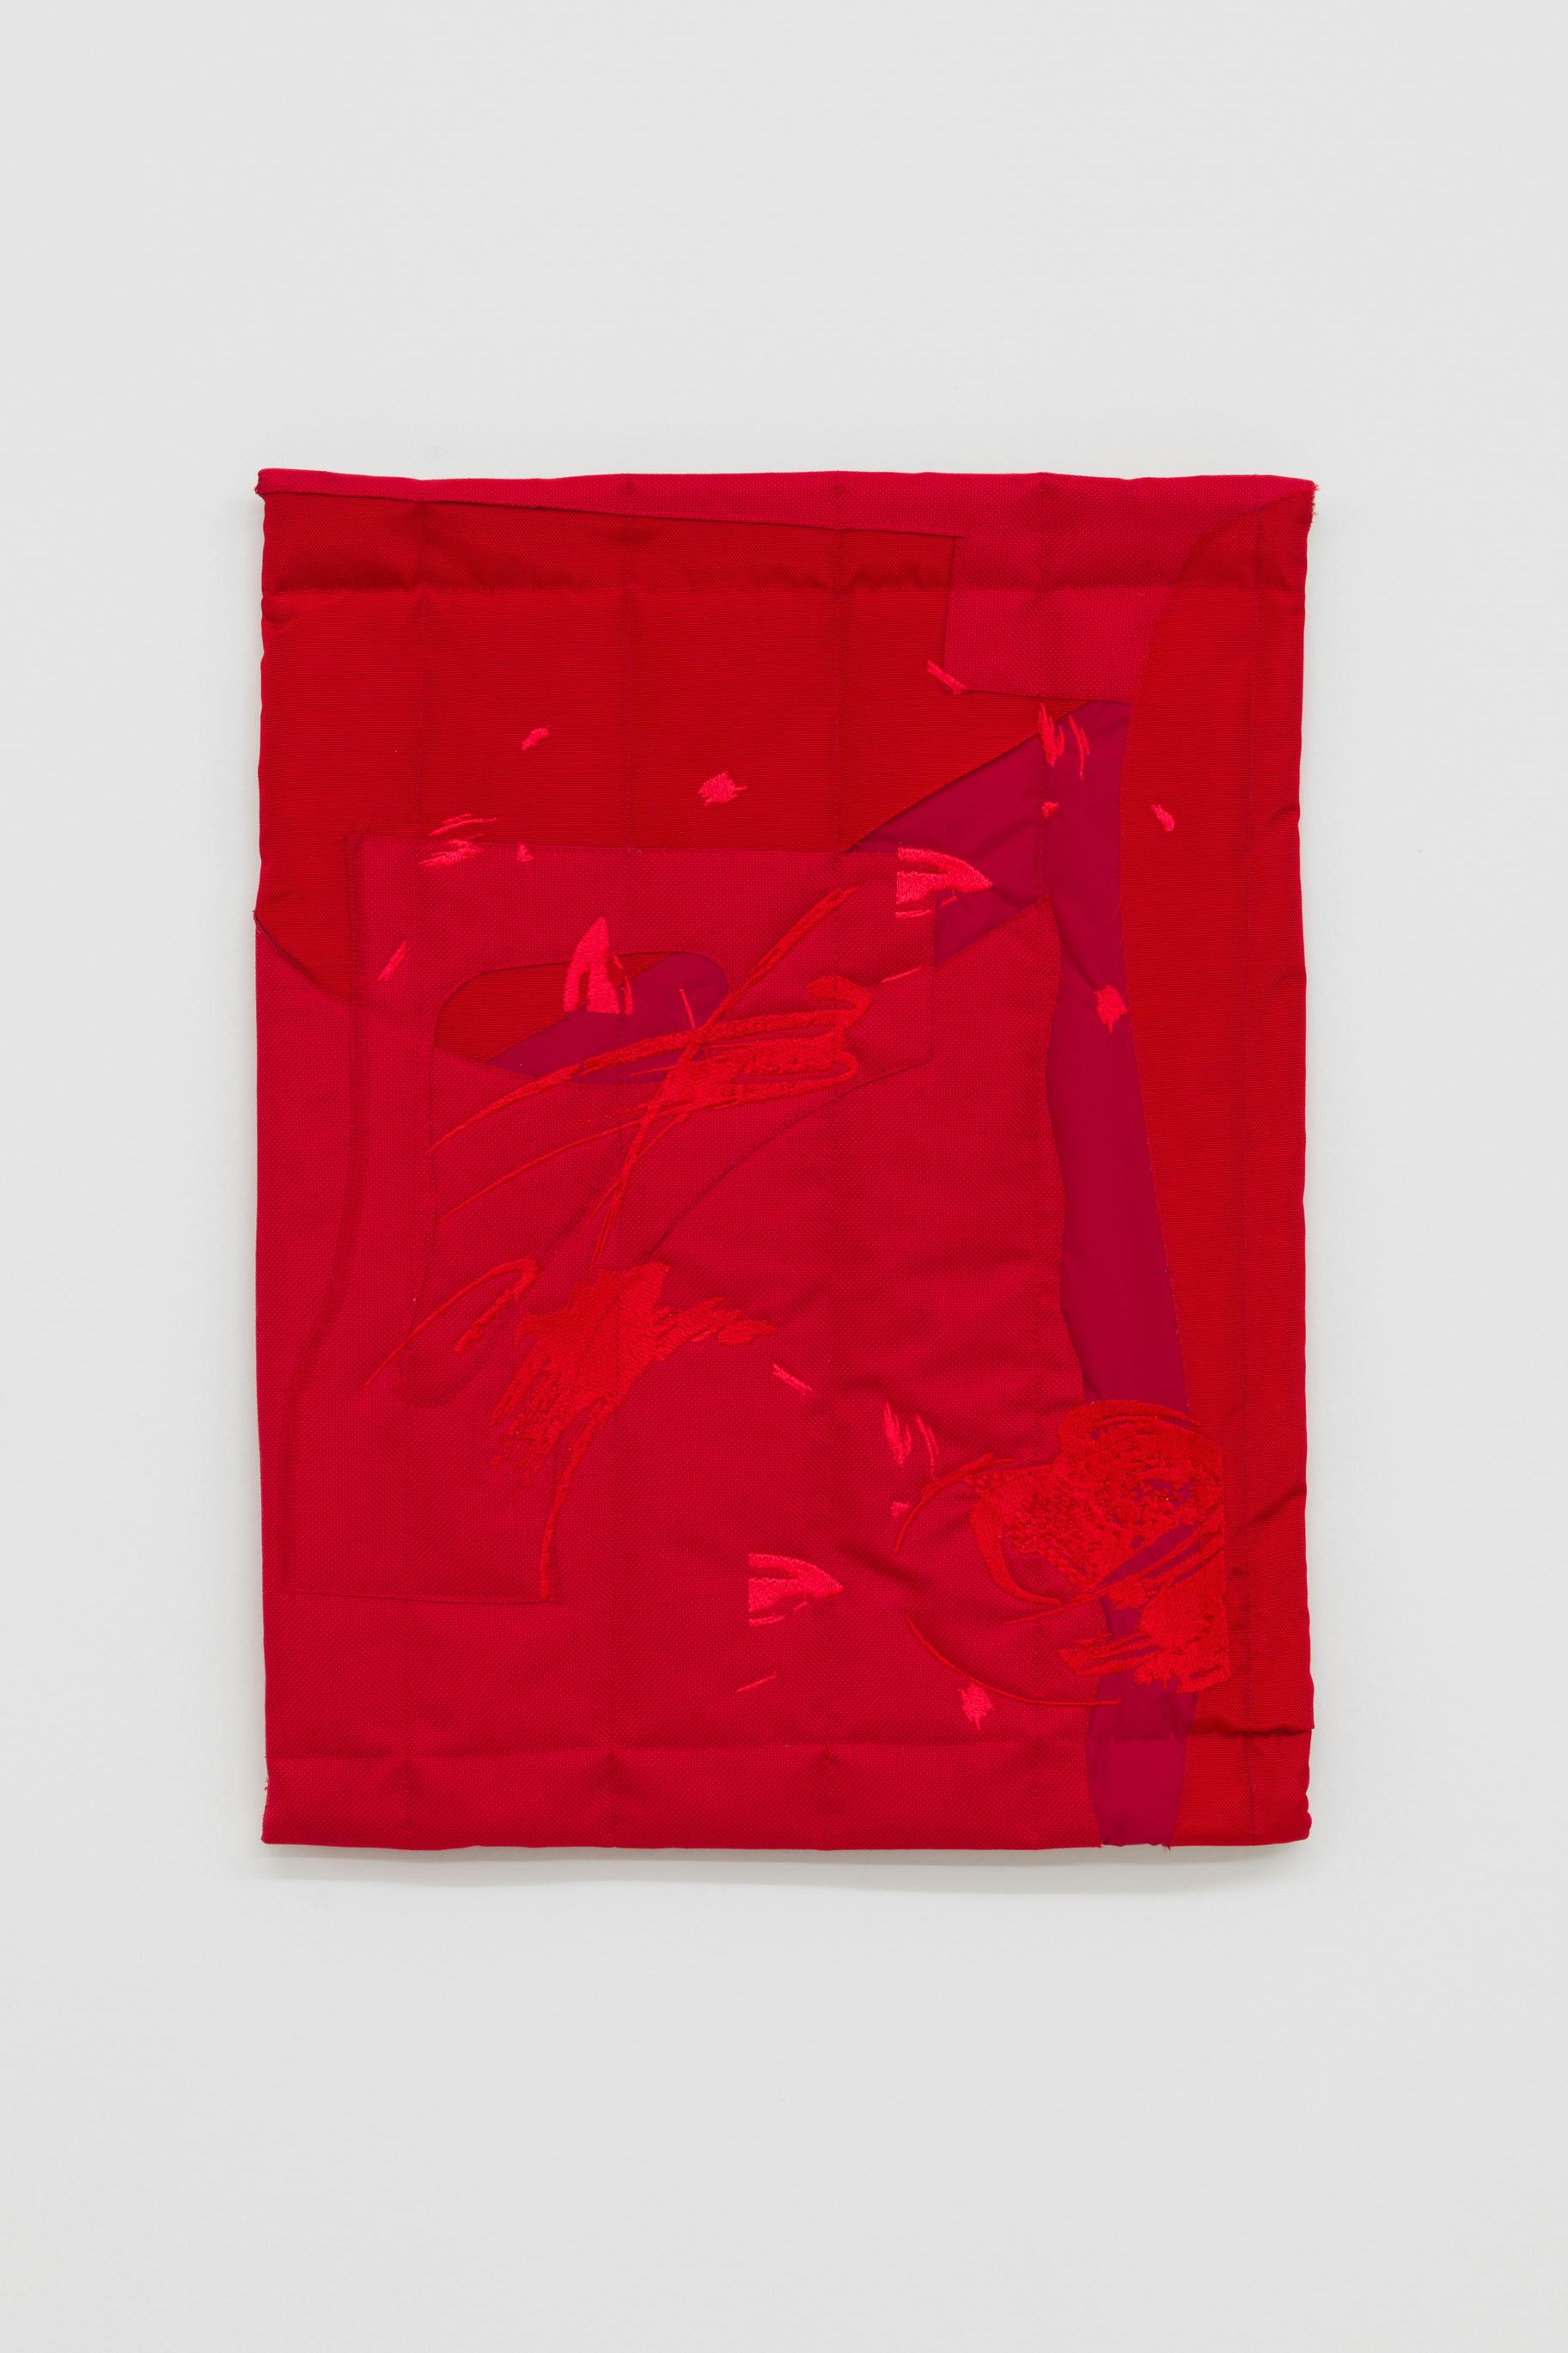 Vesta (red), textile collage, 81x67cm